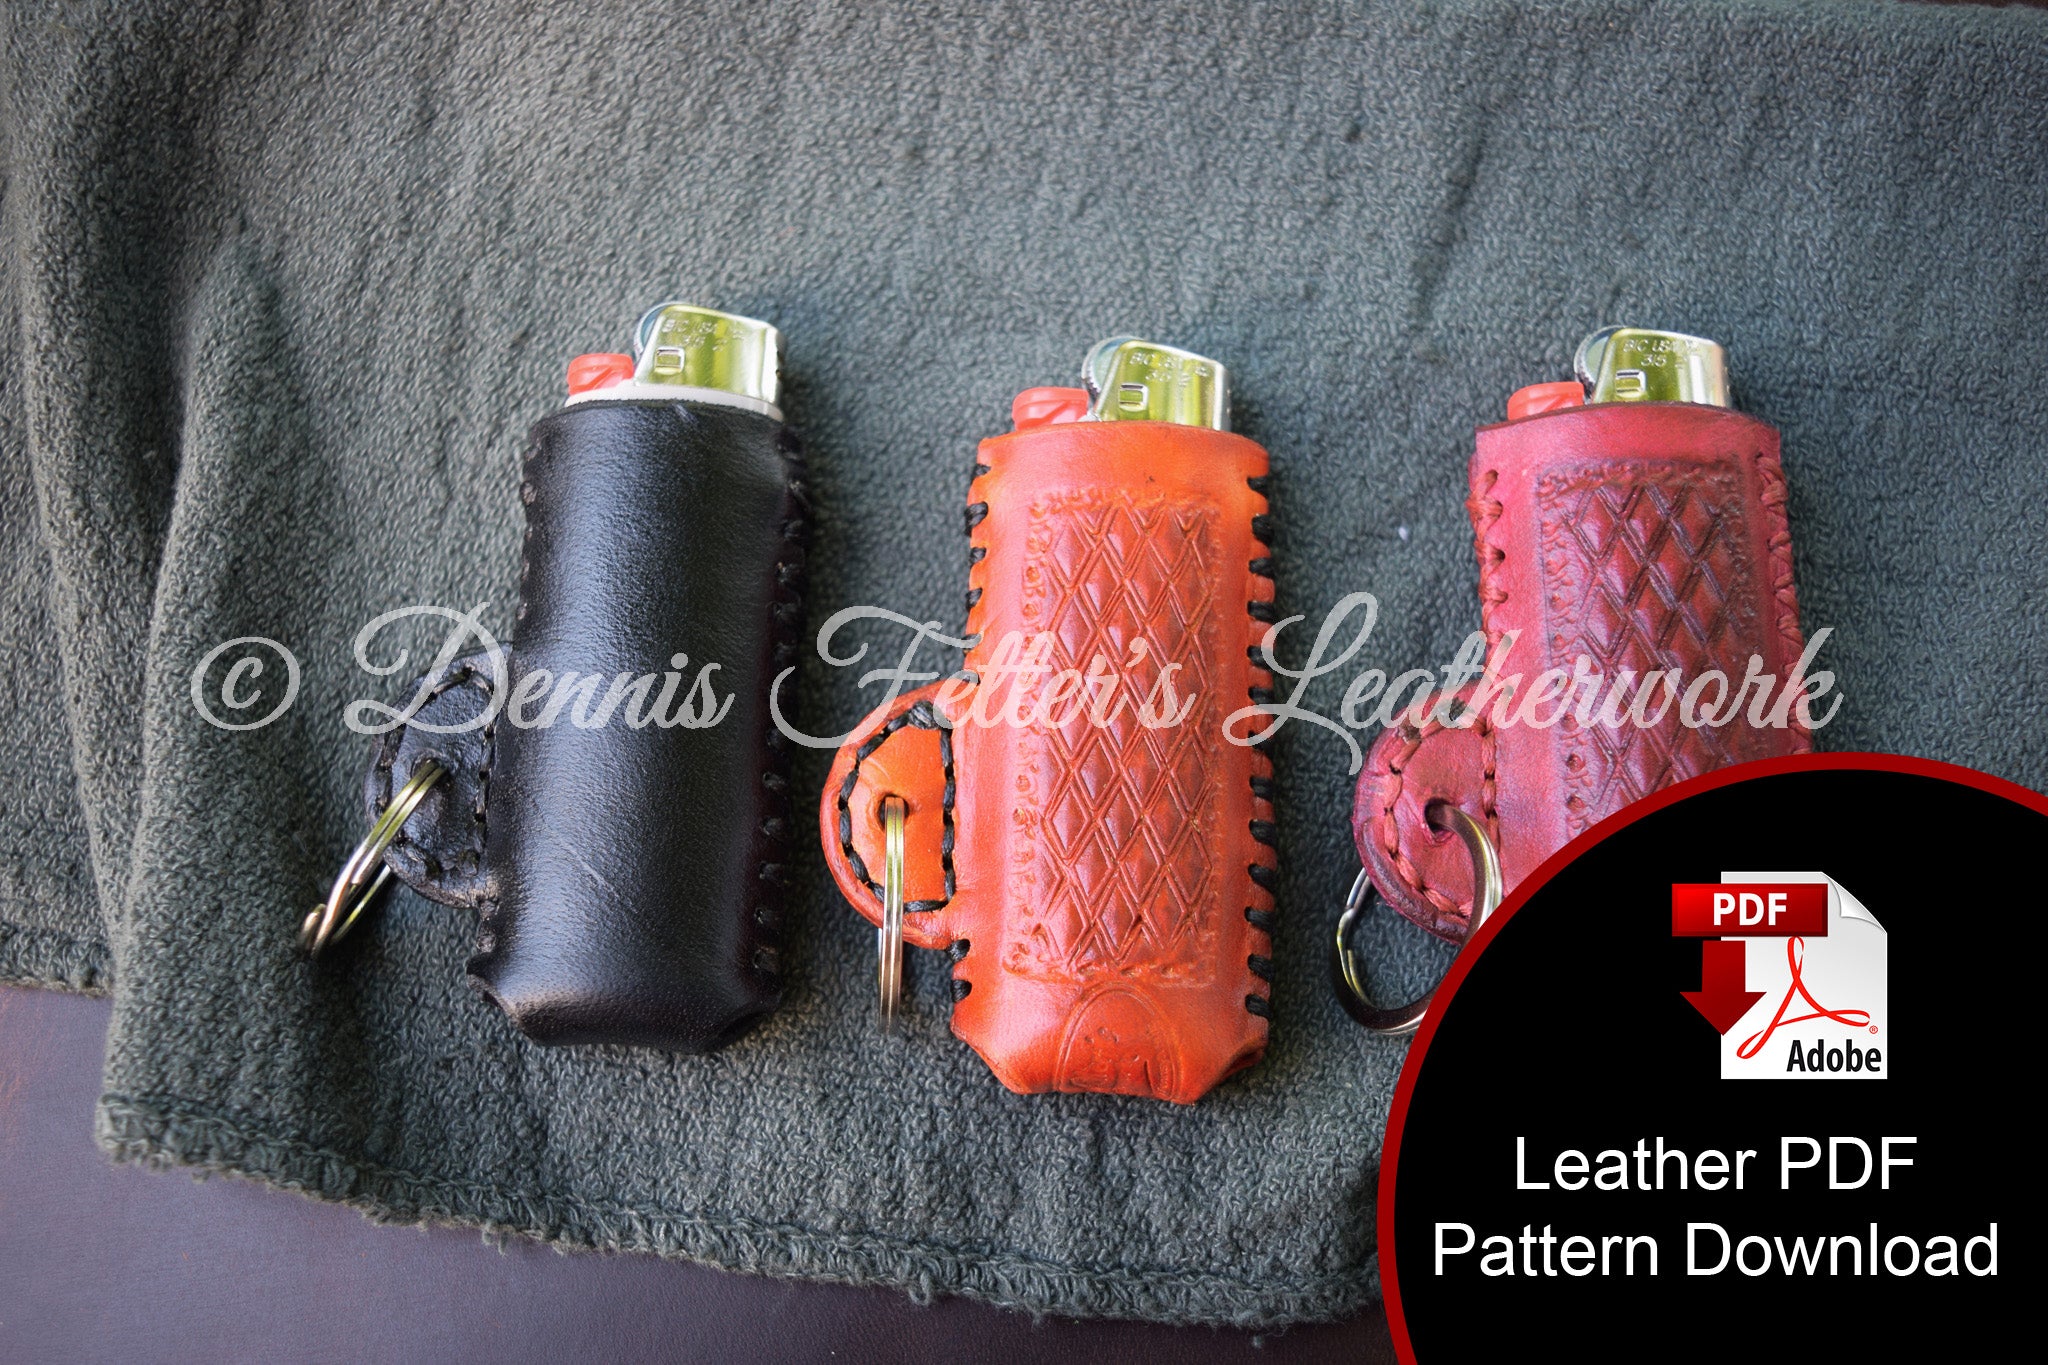 Leather Pattern Leather Lighter Case Pattern BIC Lighter Case Leather Craft  Pattern Leather Templates